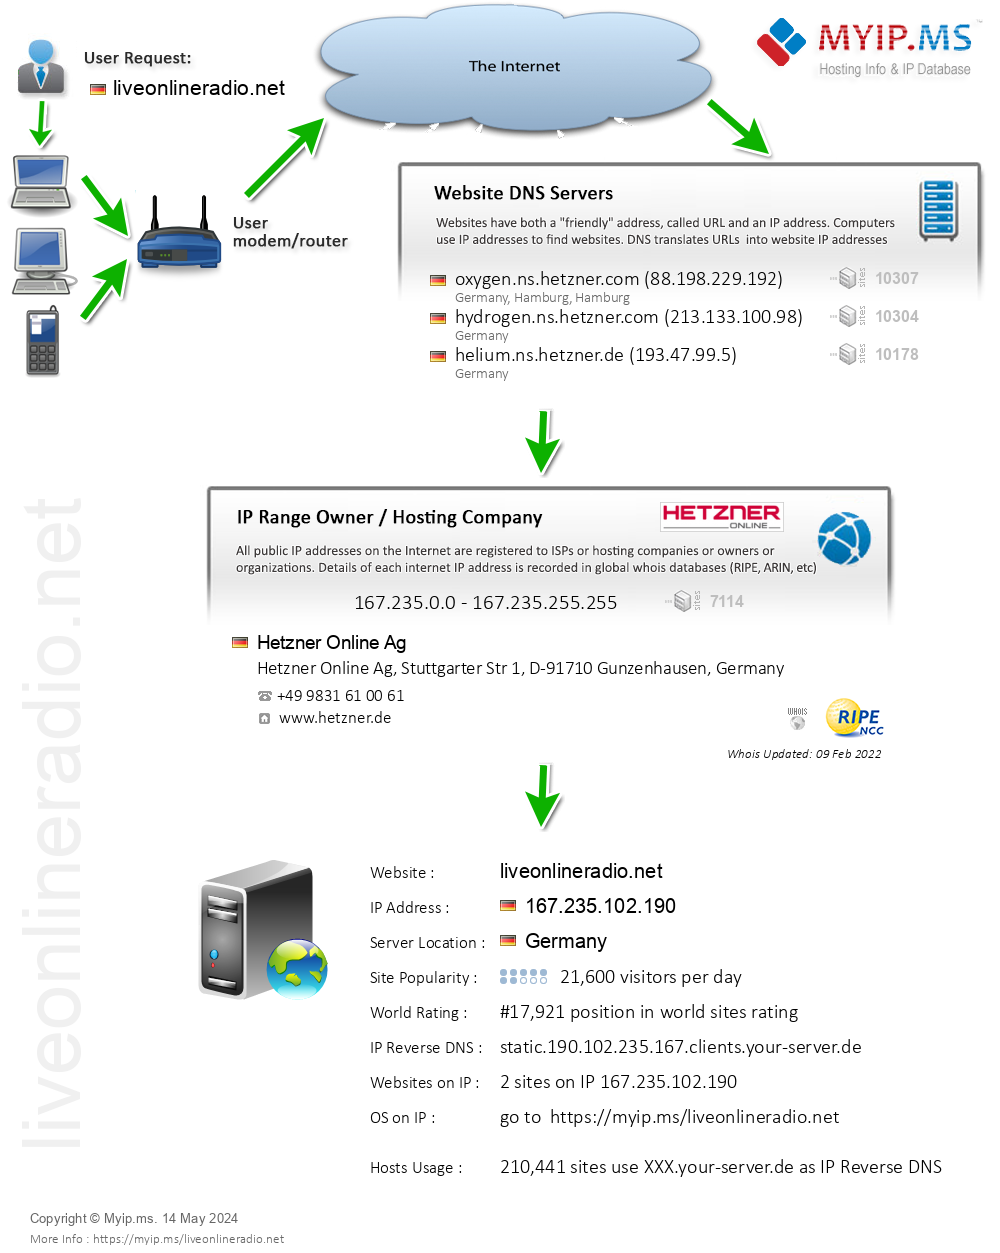 Liveonlineradio.net - Website Hosting Visual IP Diagram